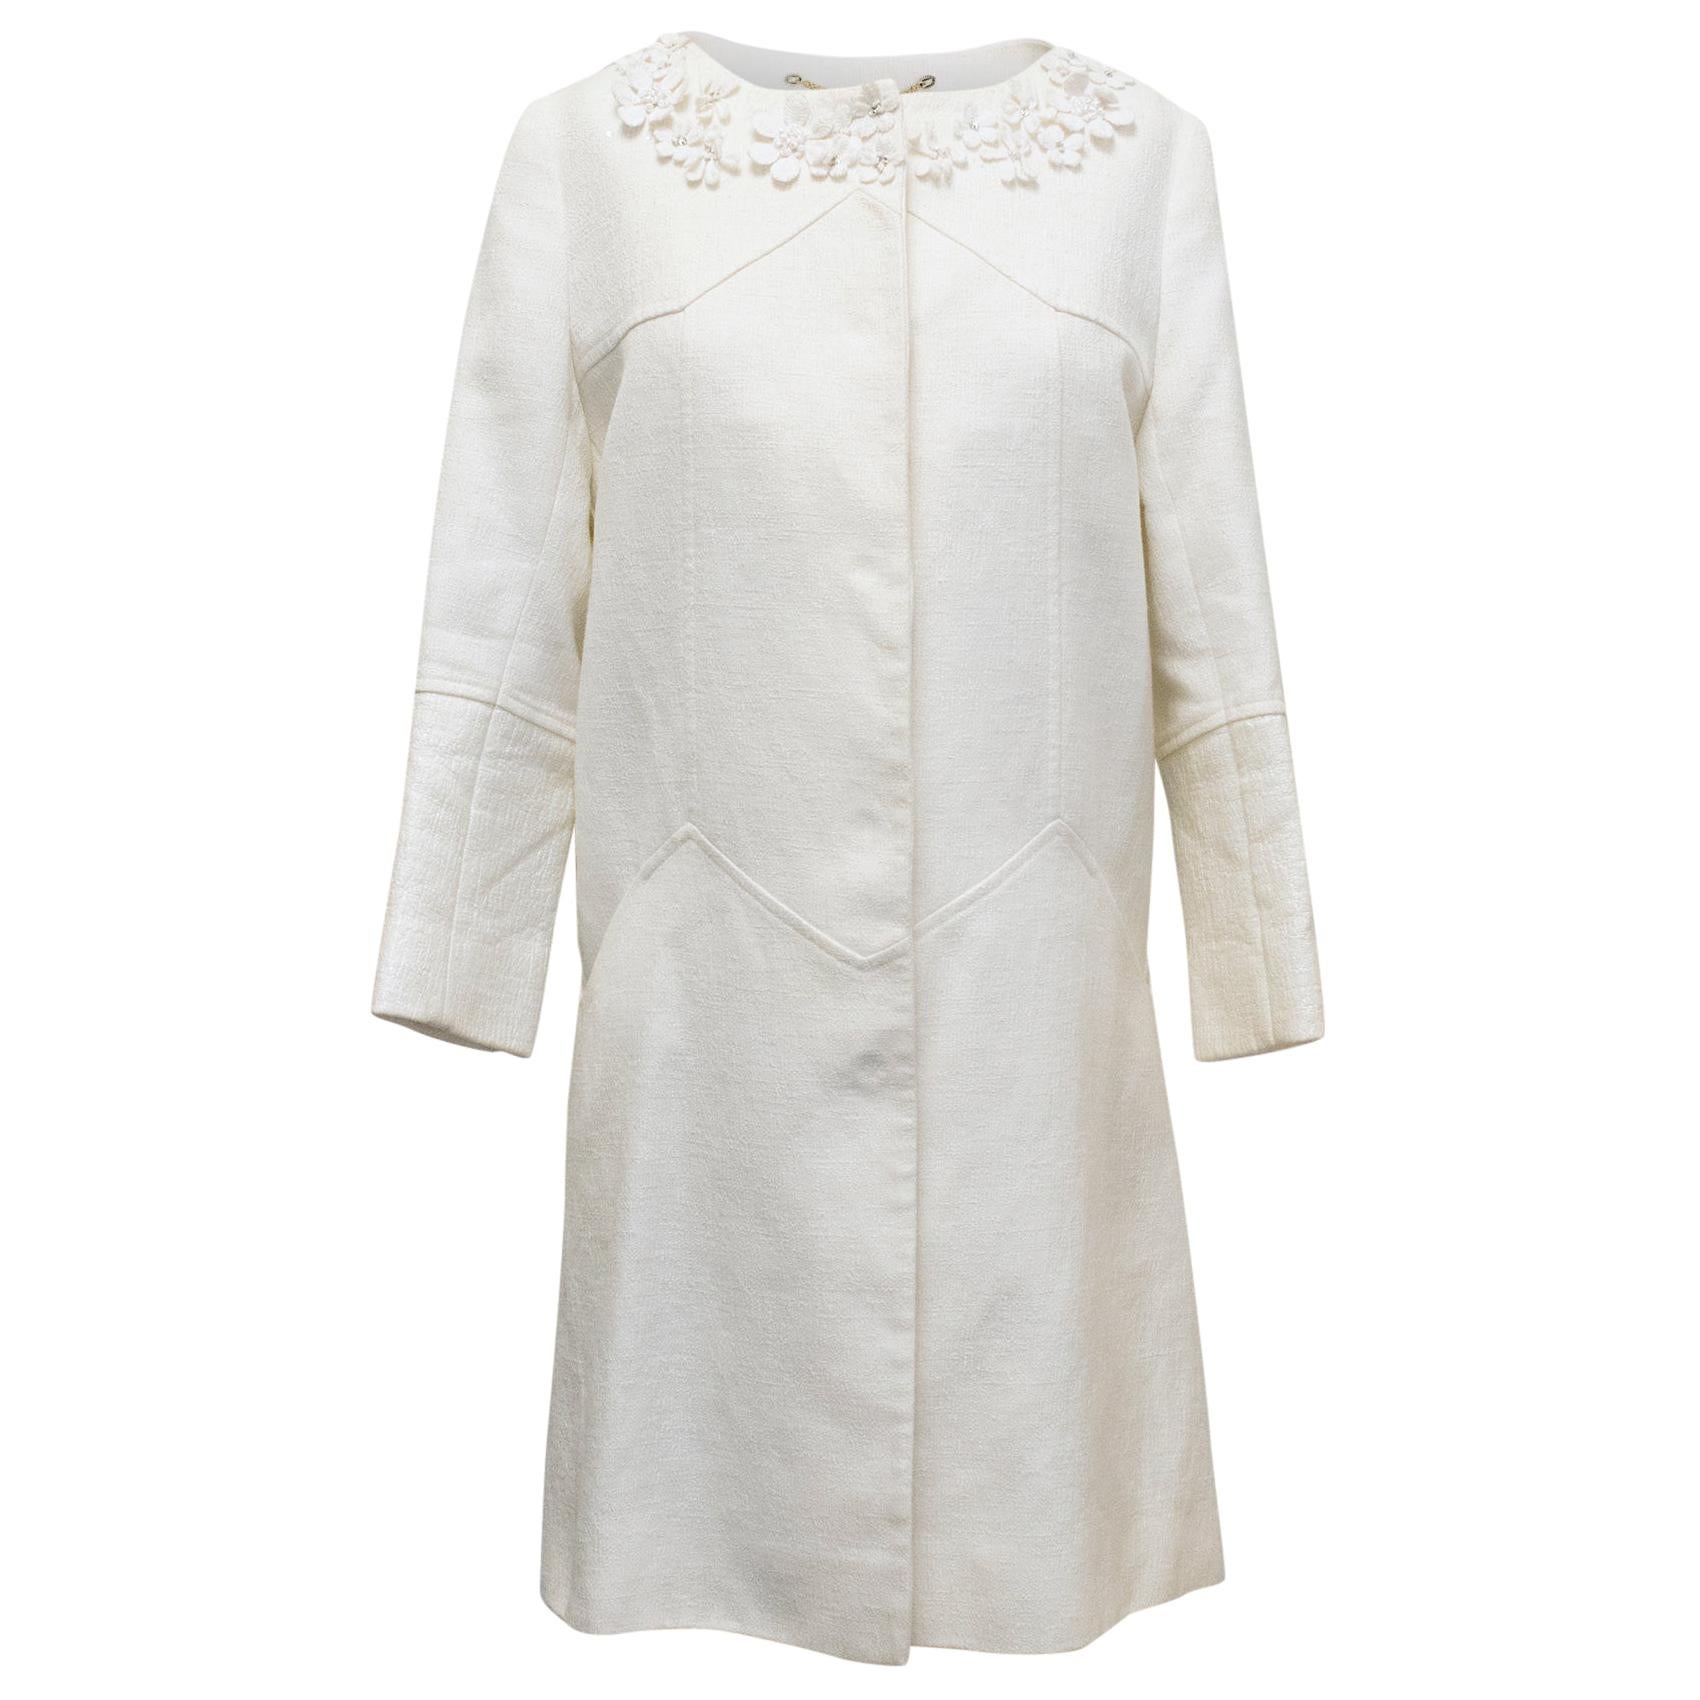 Matthew Williamson White Cotton Linen Summer Coat - Size US 2-4 For Sale